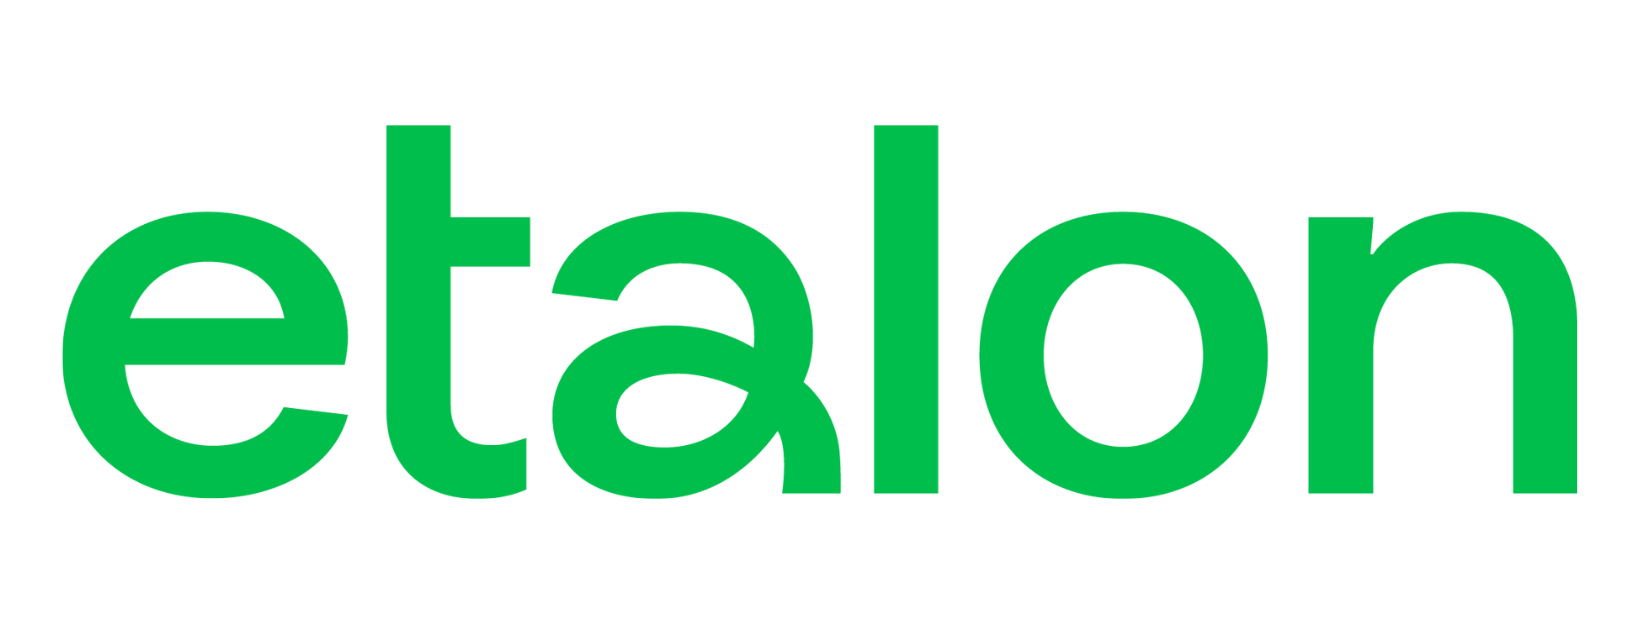 Etalon posture helpcenter logo